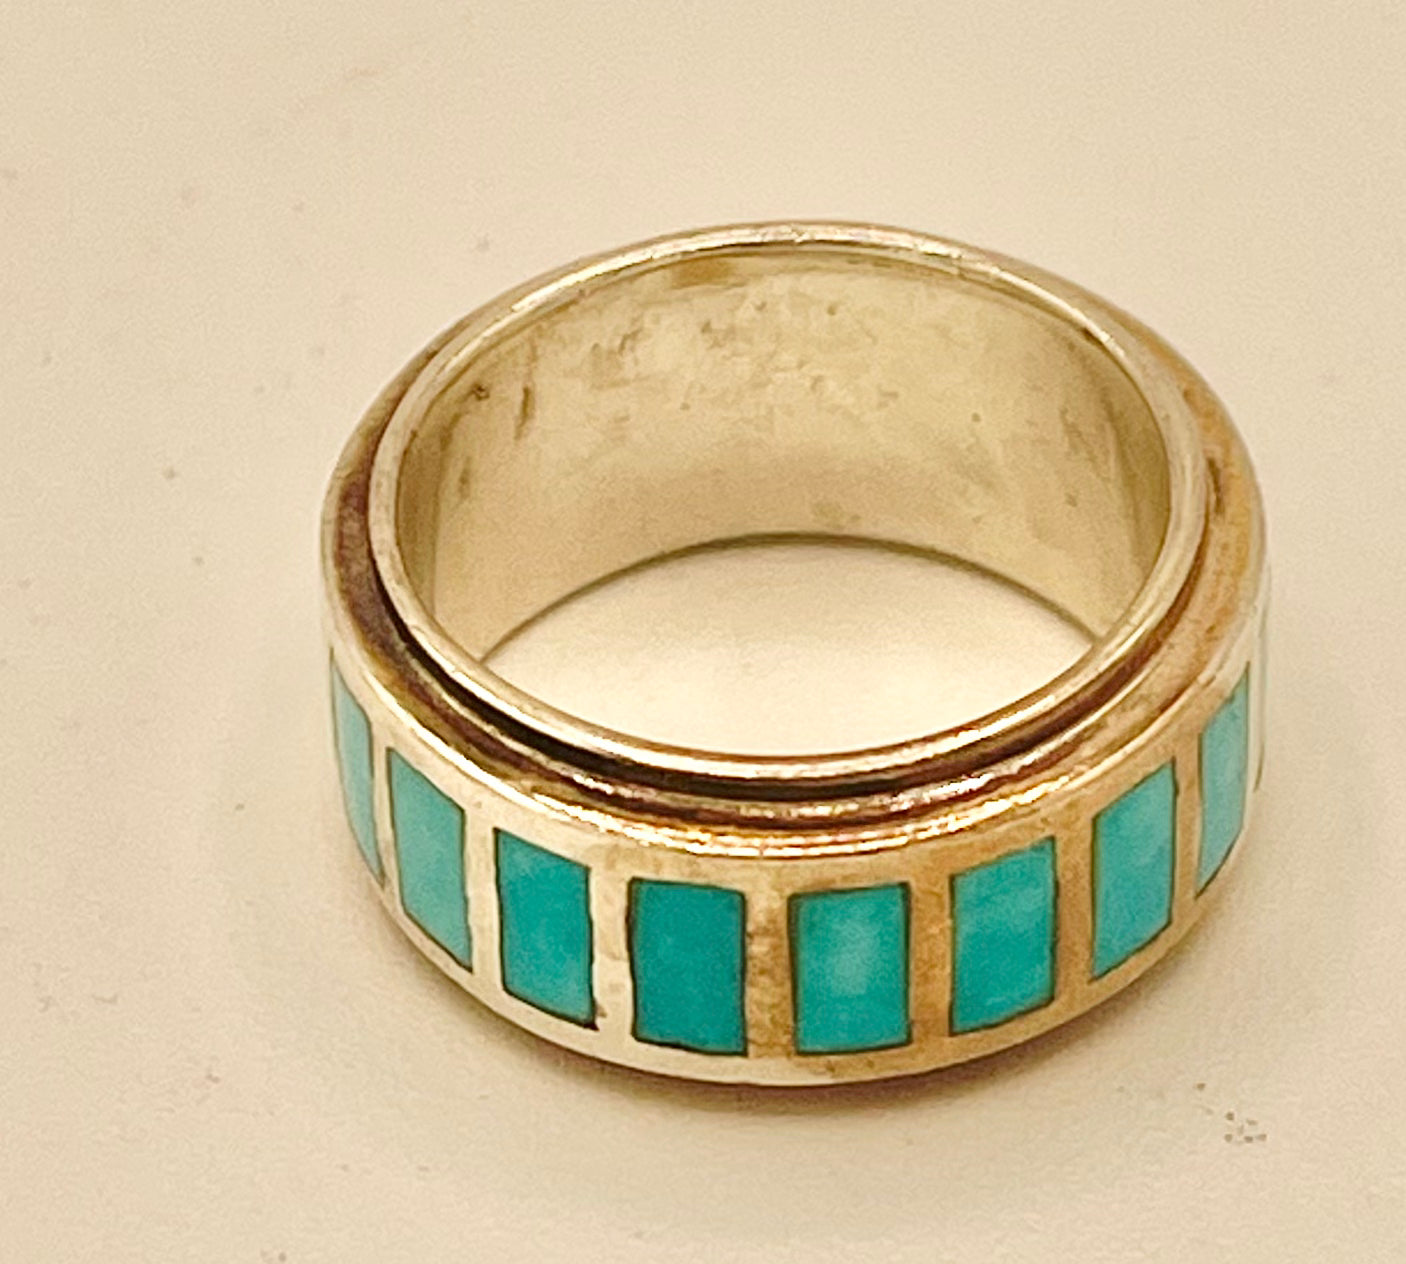 Ring- Turquoise Inlayed Band size 6